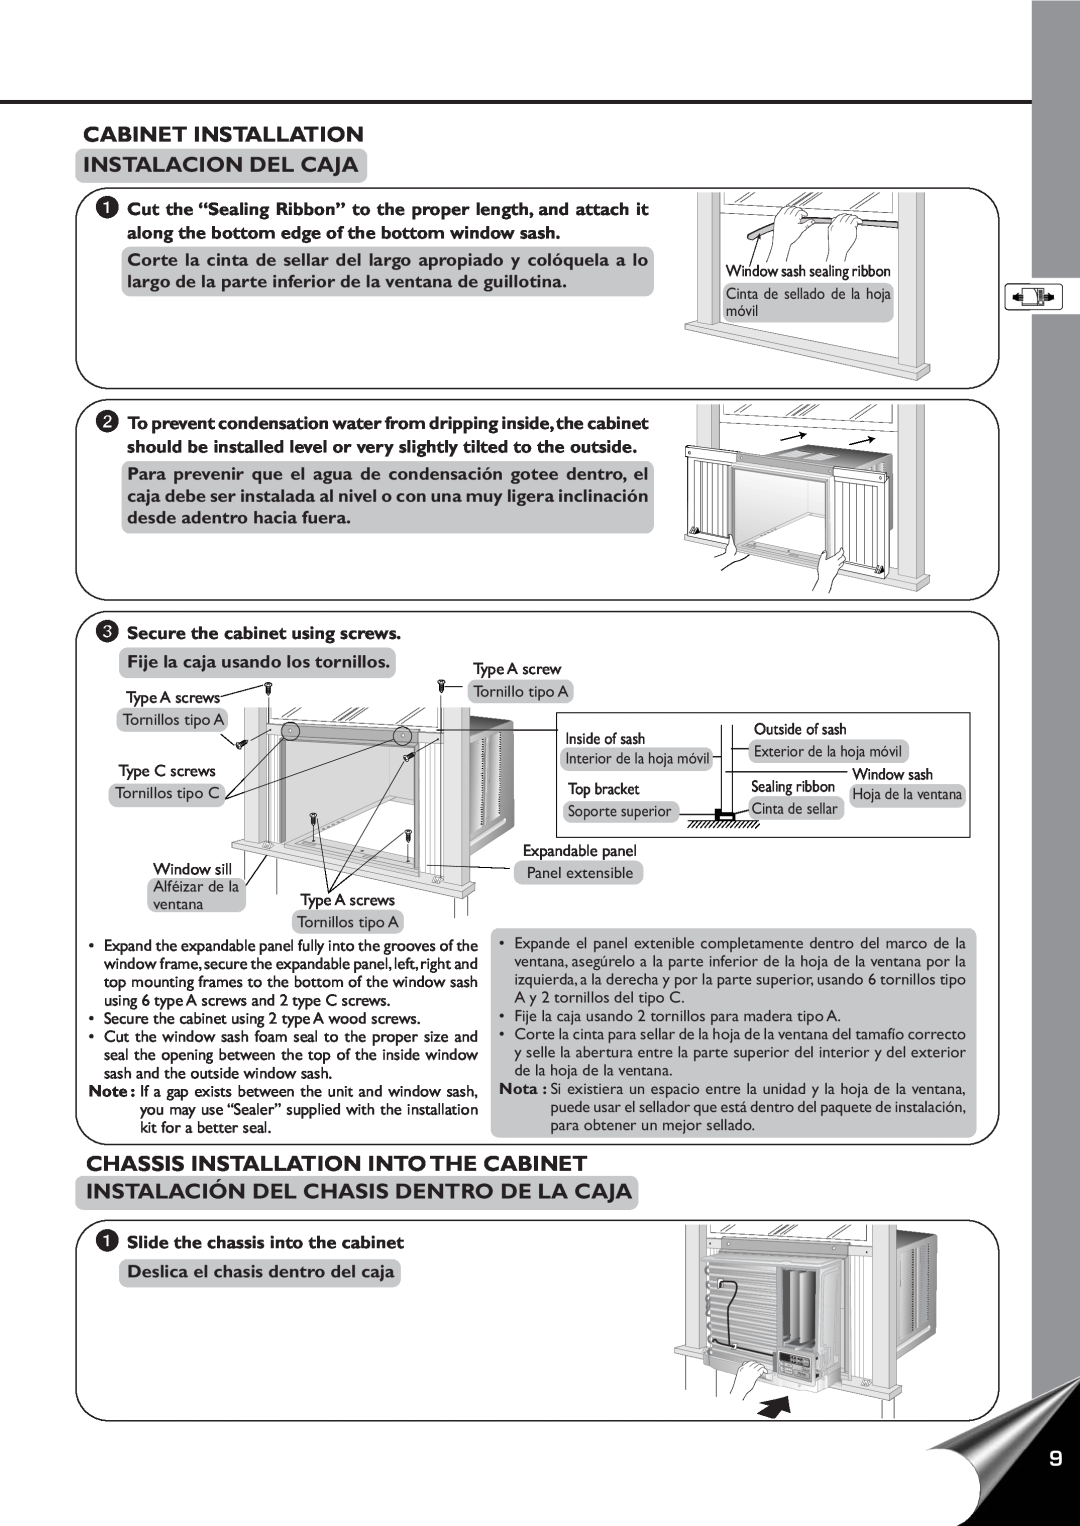 Panasonic CW-XC80YU, CW-XC60YU manual Cabinet Installation Instalacion Del Caja, Chassis Installation Into The Cabinet 